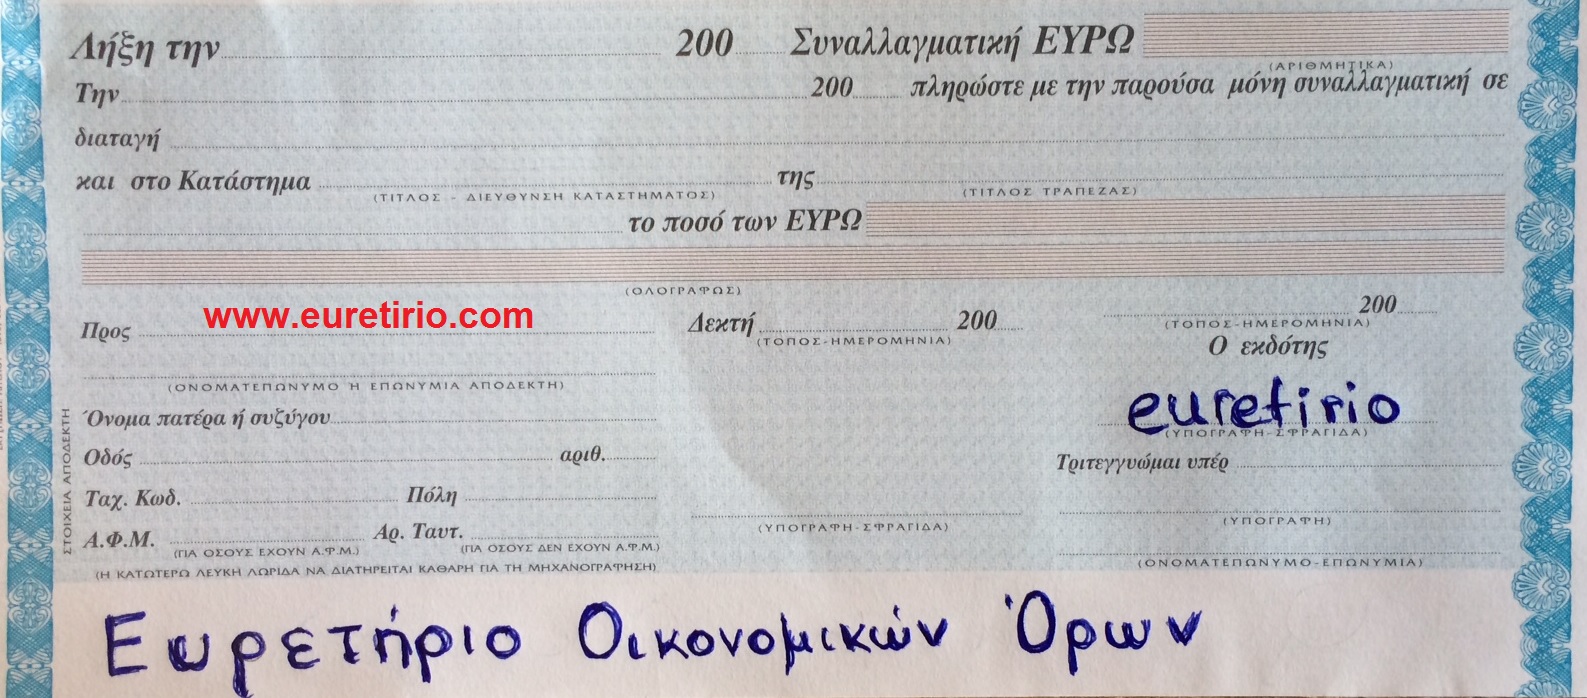 Synallagmatiki (bill of exchange) - Ευρετηριο